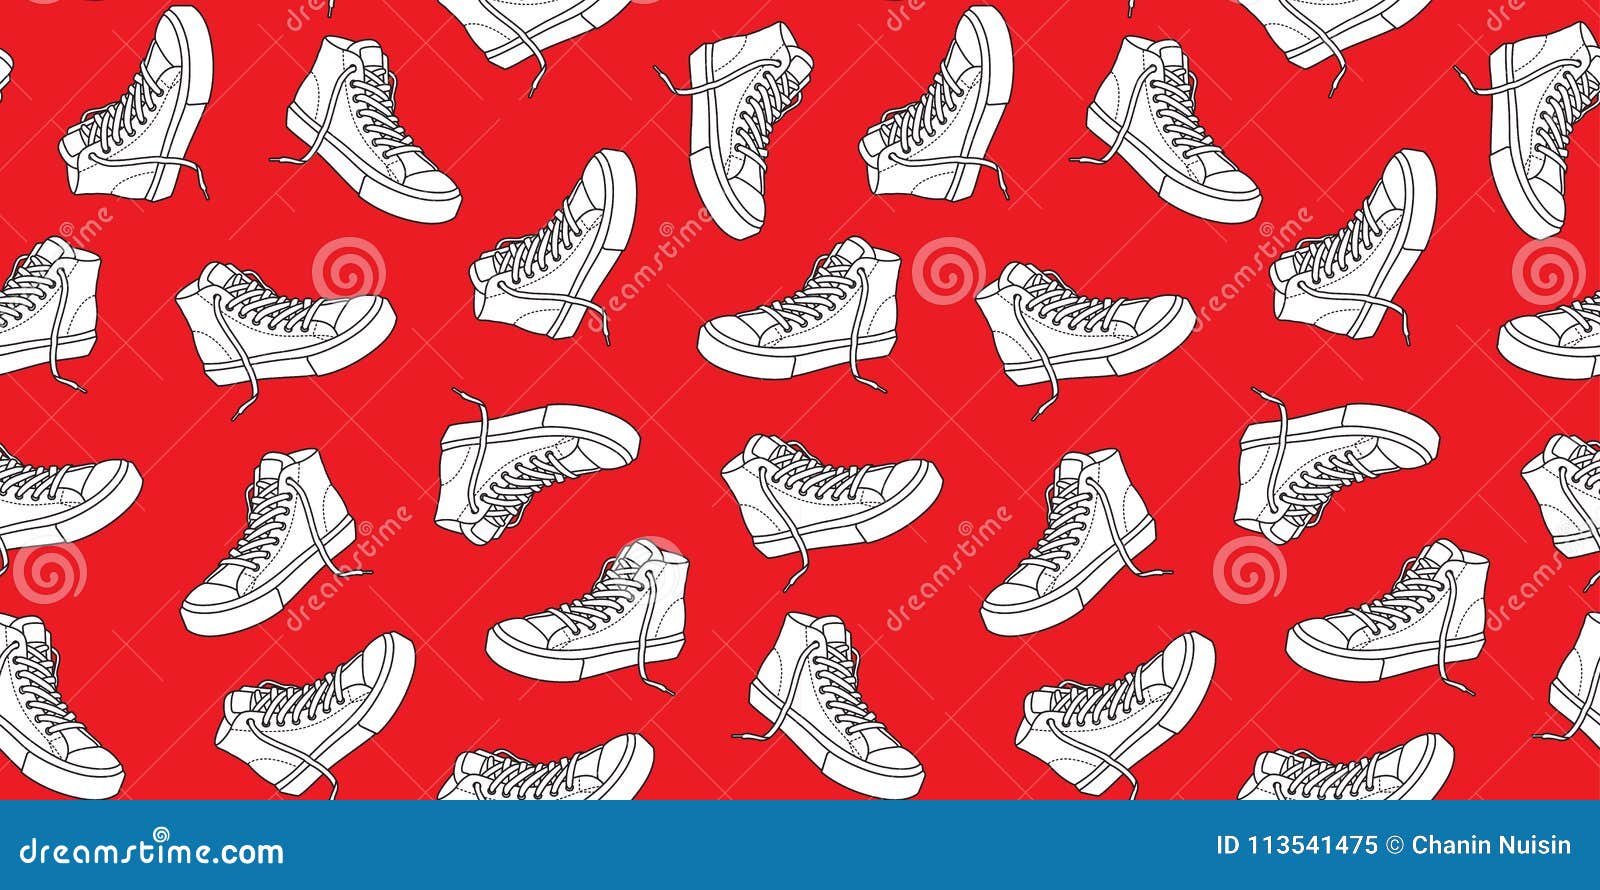 47000 Shoes Wallpaper Illustrations RoyaltyFree Vector Graphics  Clip  Art  iStock  Shopping